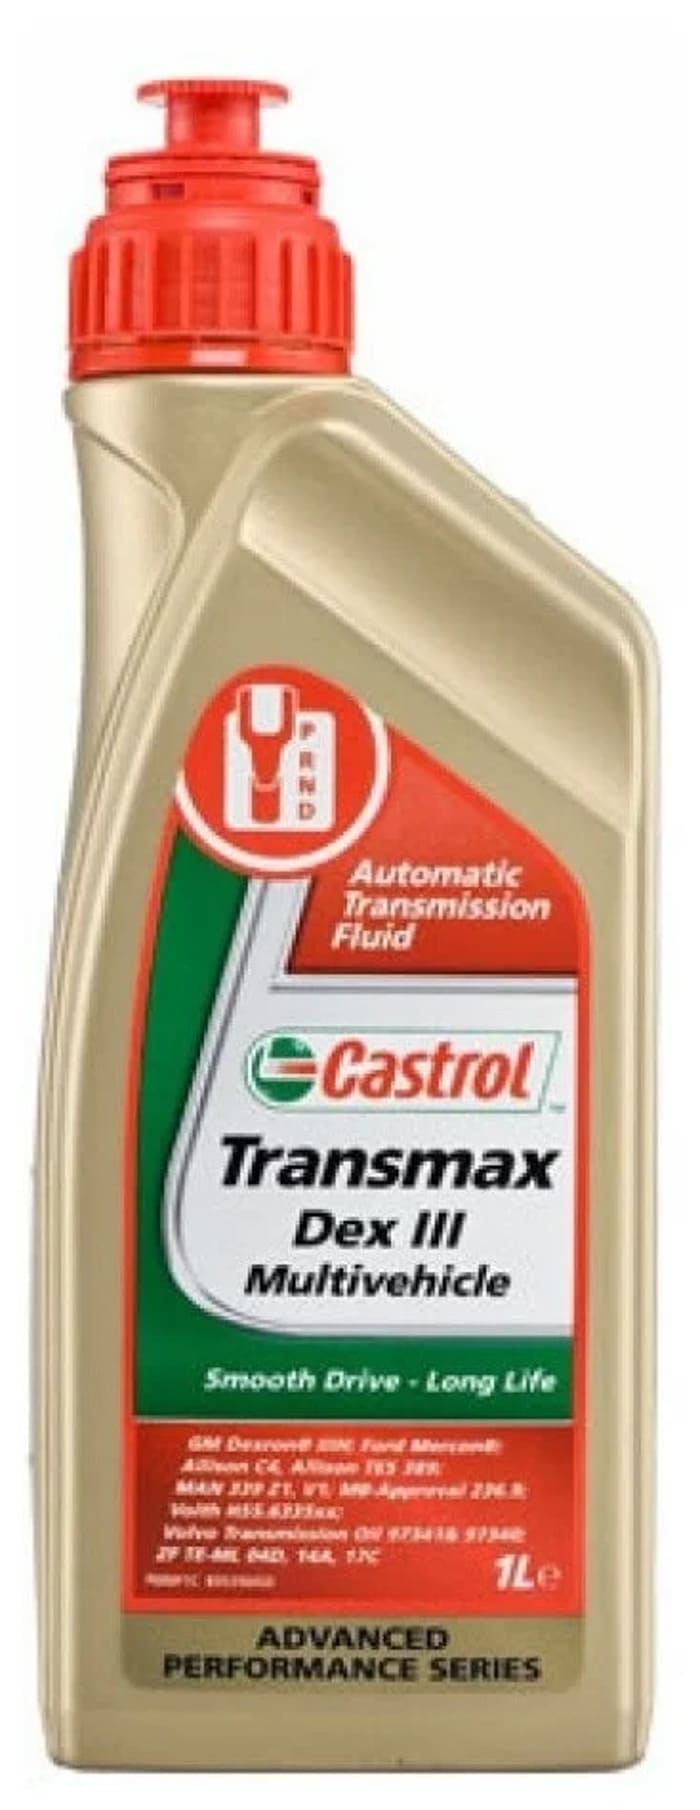 Castrol Transmax ATF Dex/Merc Multivehicle 1л. Castrol Transmax Dex III Multivehicle ATF. 15dd2c масло трансмиссионное Castrol Transmax ATF Dex/Merc Multivehicle 1 л 15dd2c. Масло трансмиссионное Castrol Dex 2. Castrol transmax atf